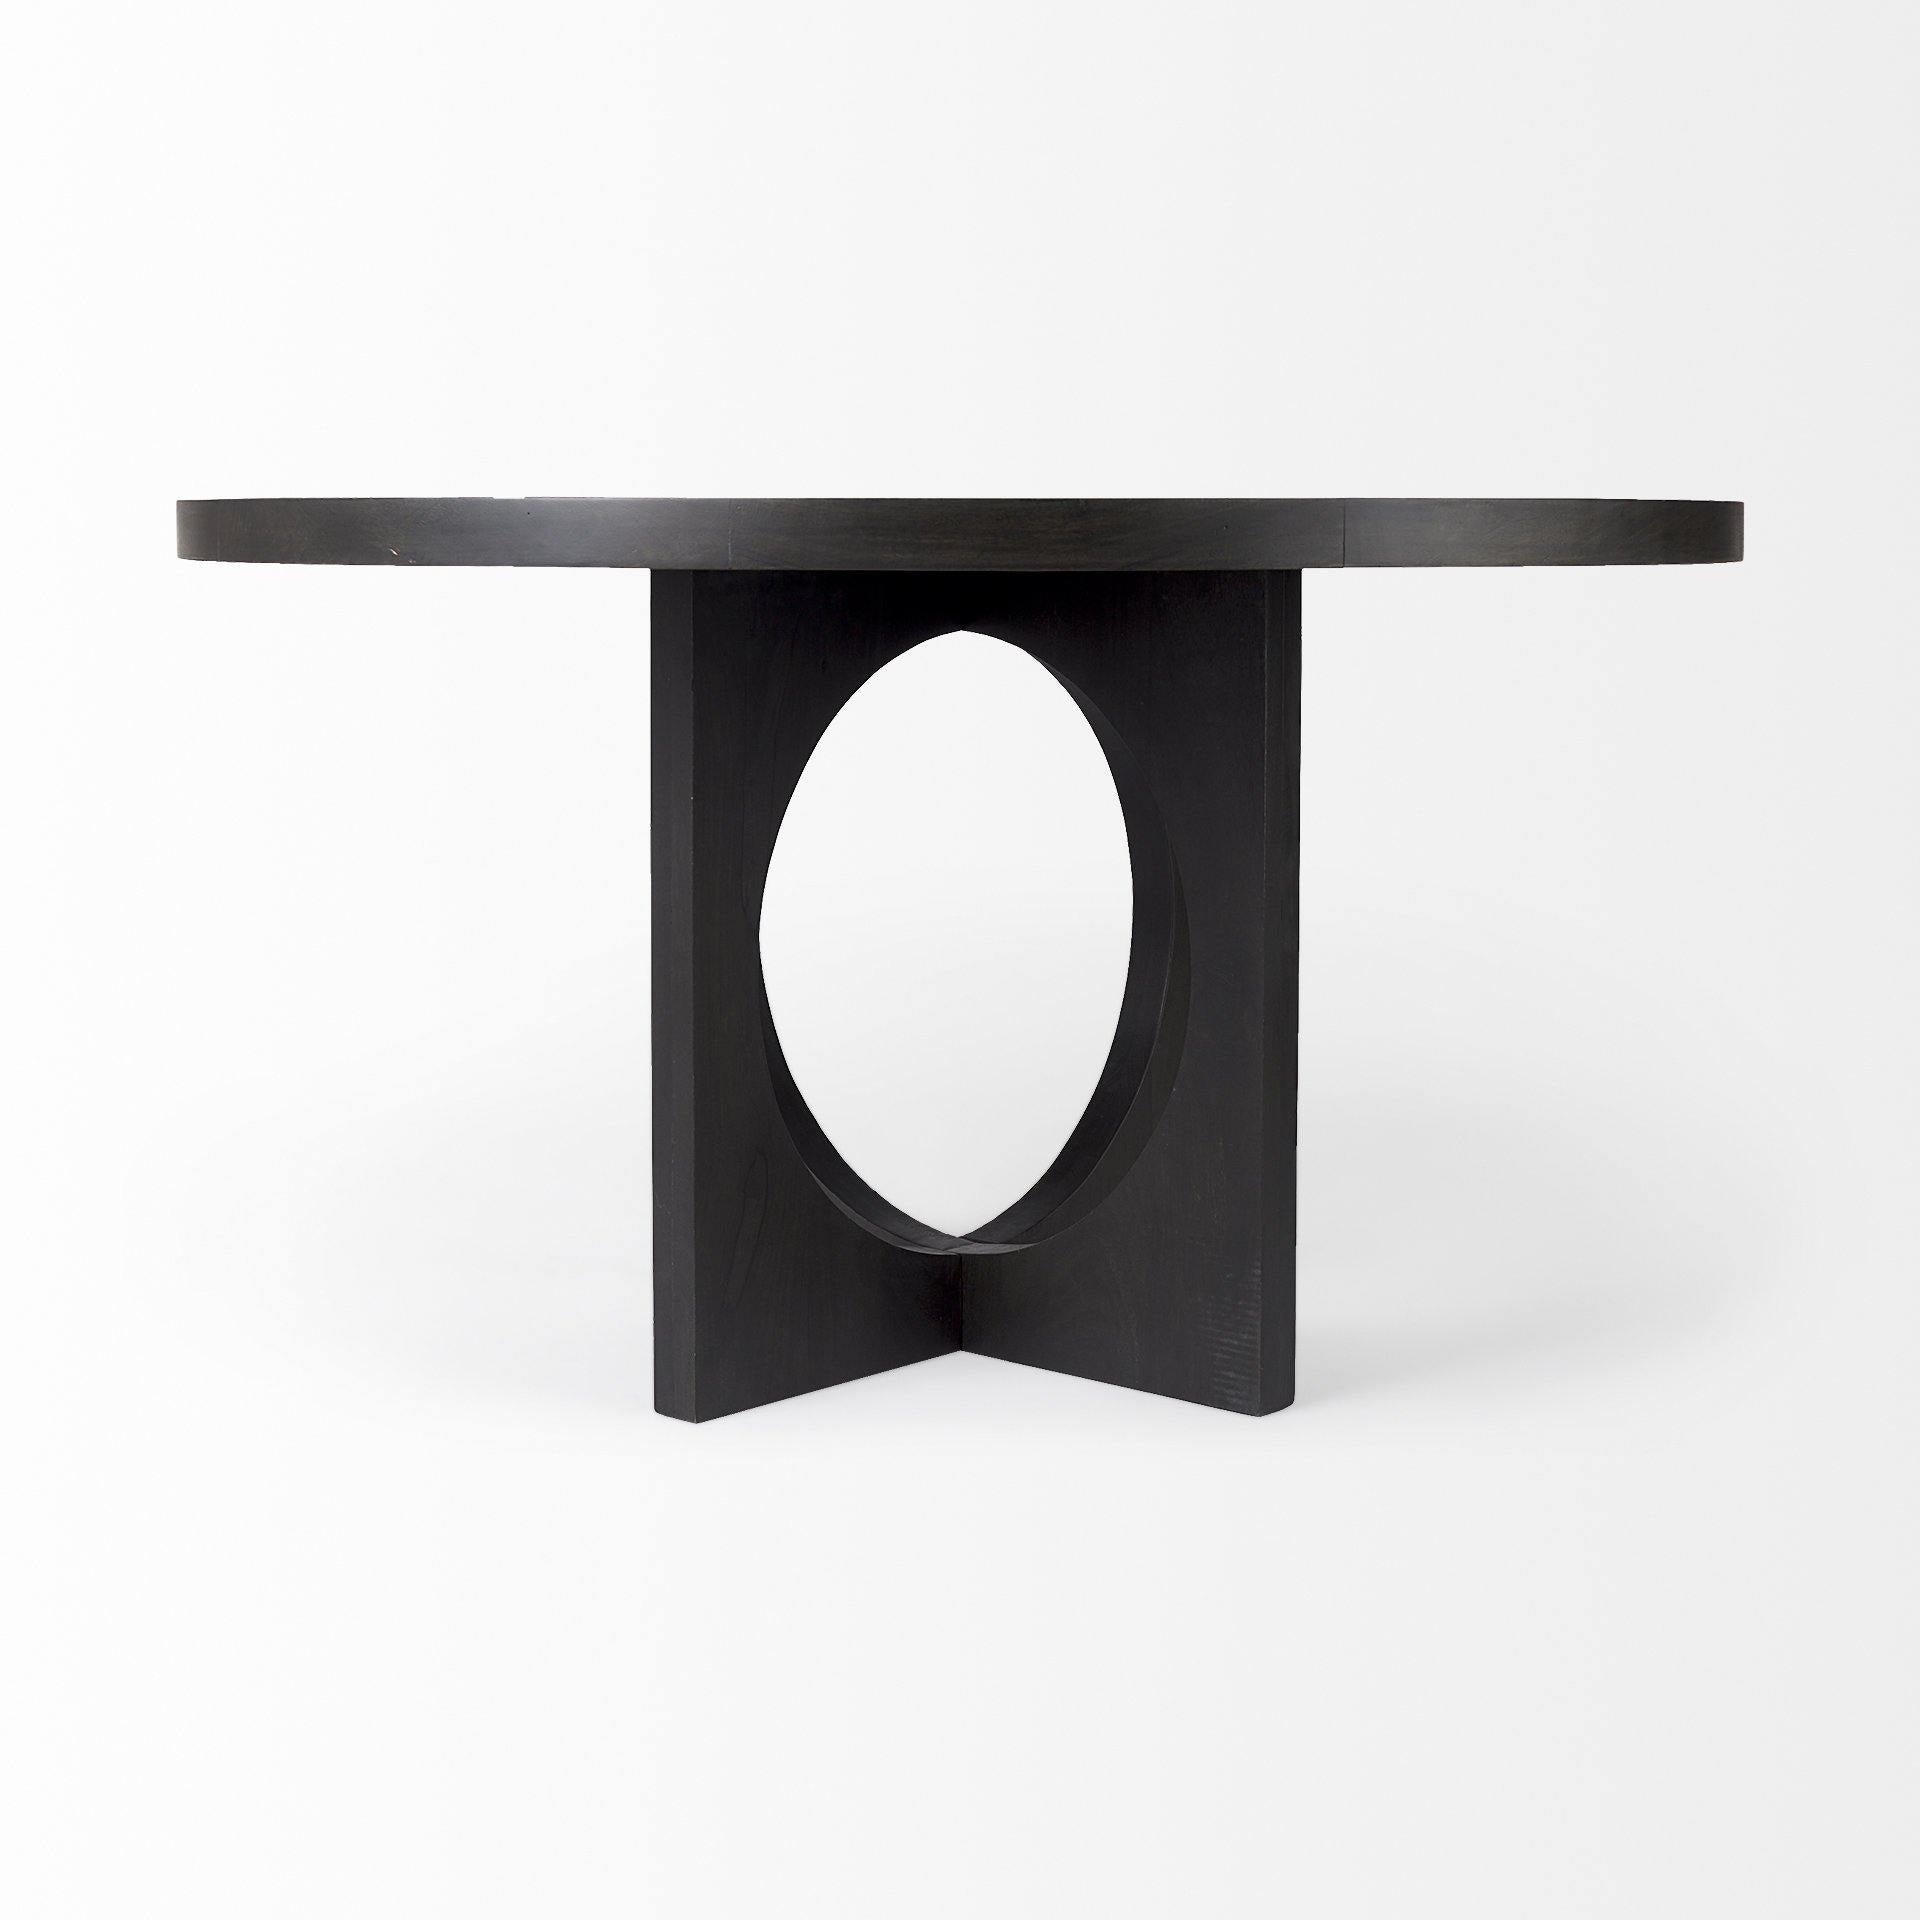 Liesl Black Mango Wood Dining Table - Reimagine Designs - dining table, new